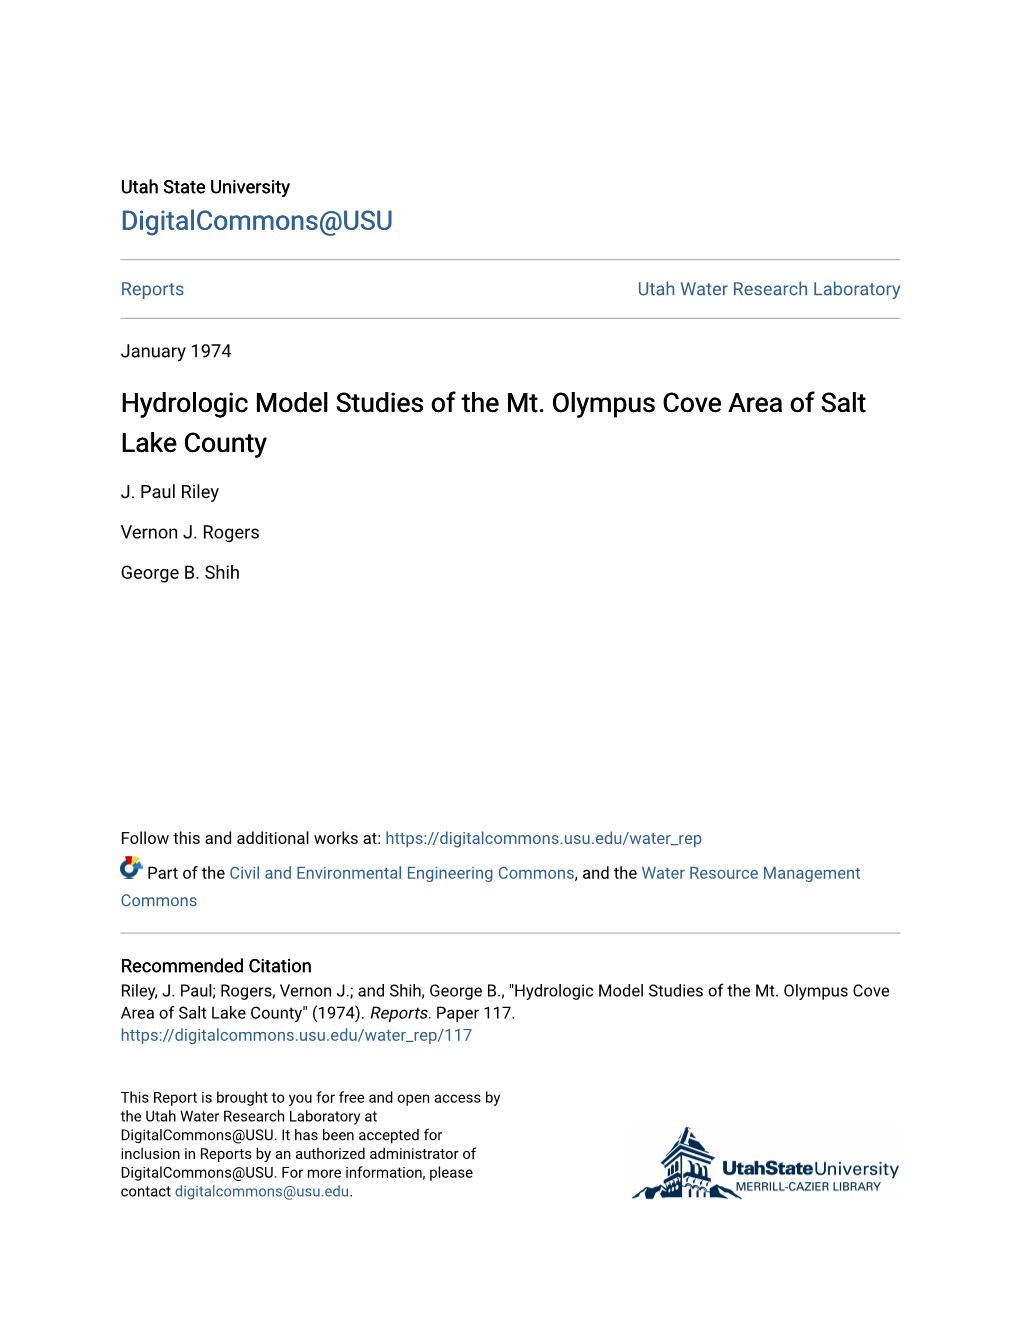 Hydrologic Model Studies of the Mt. Olympus Cove Area of Salt Lake County